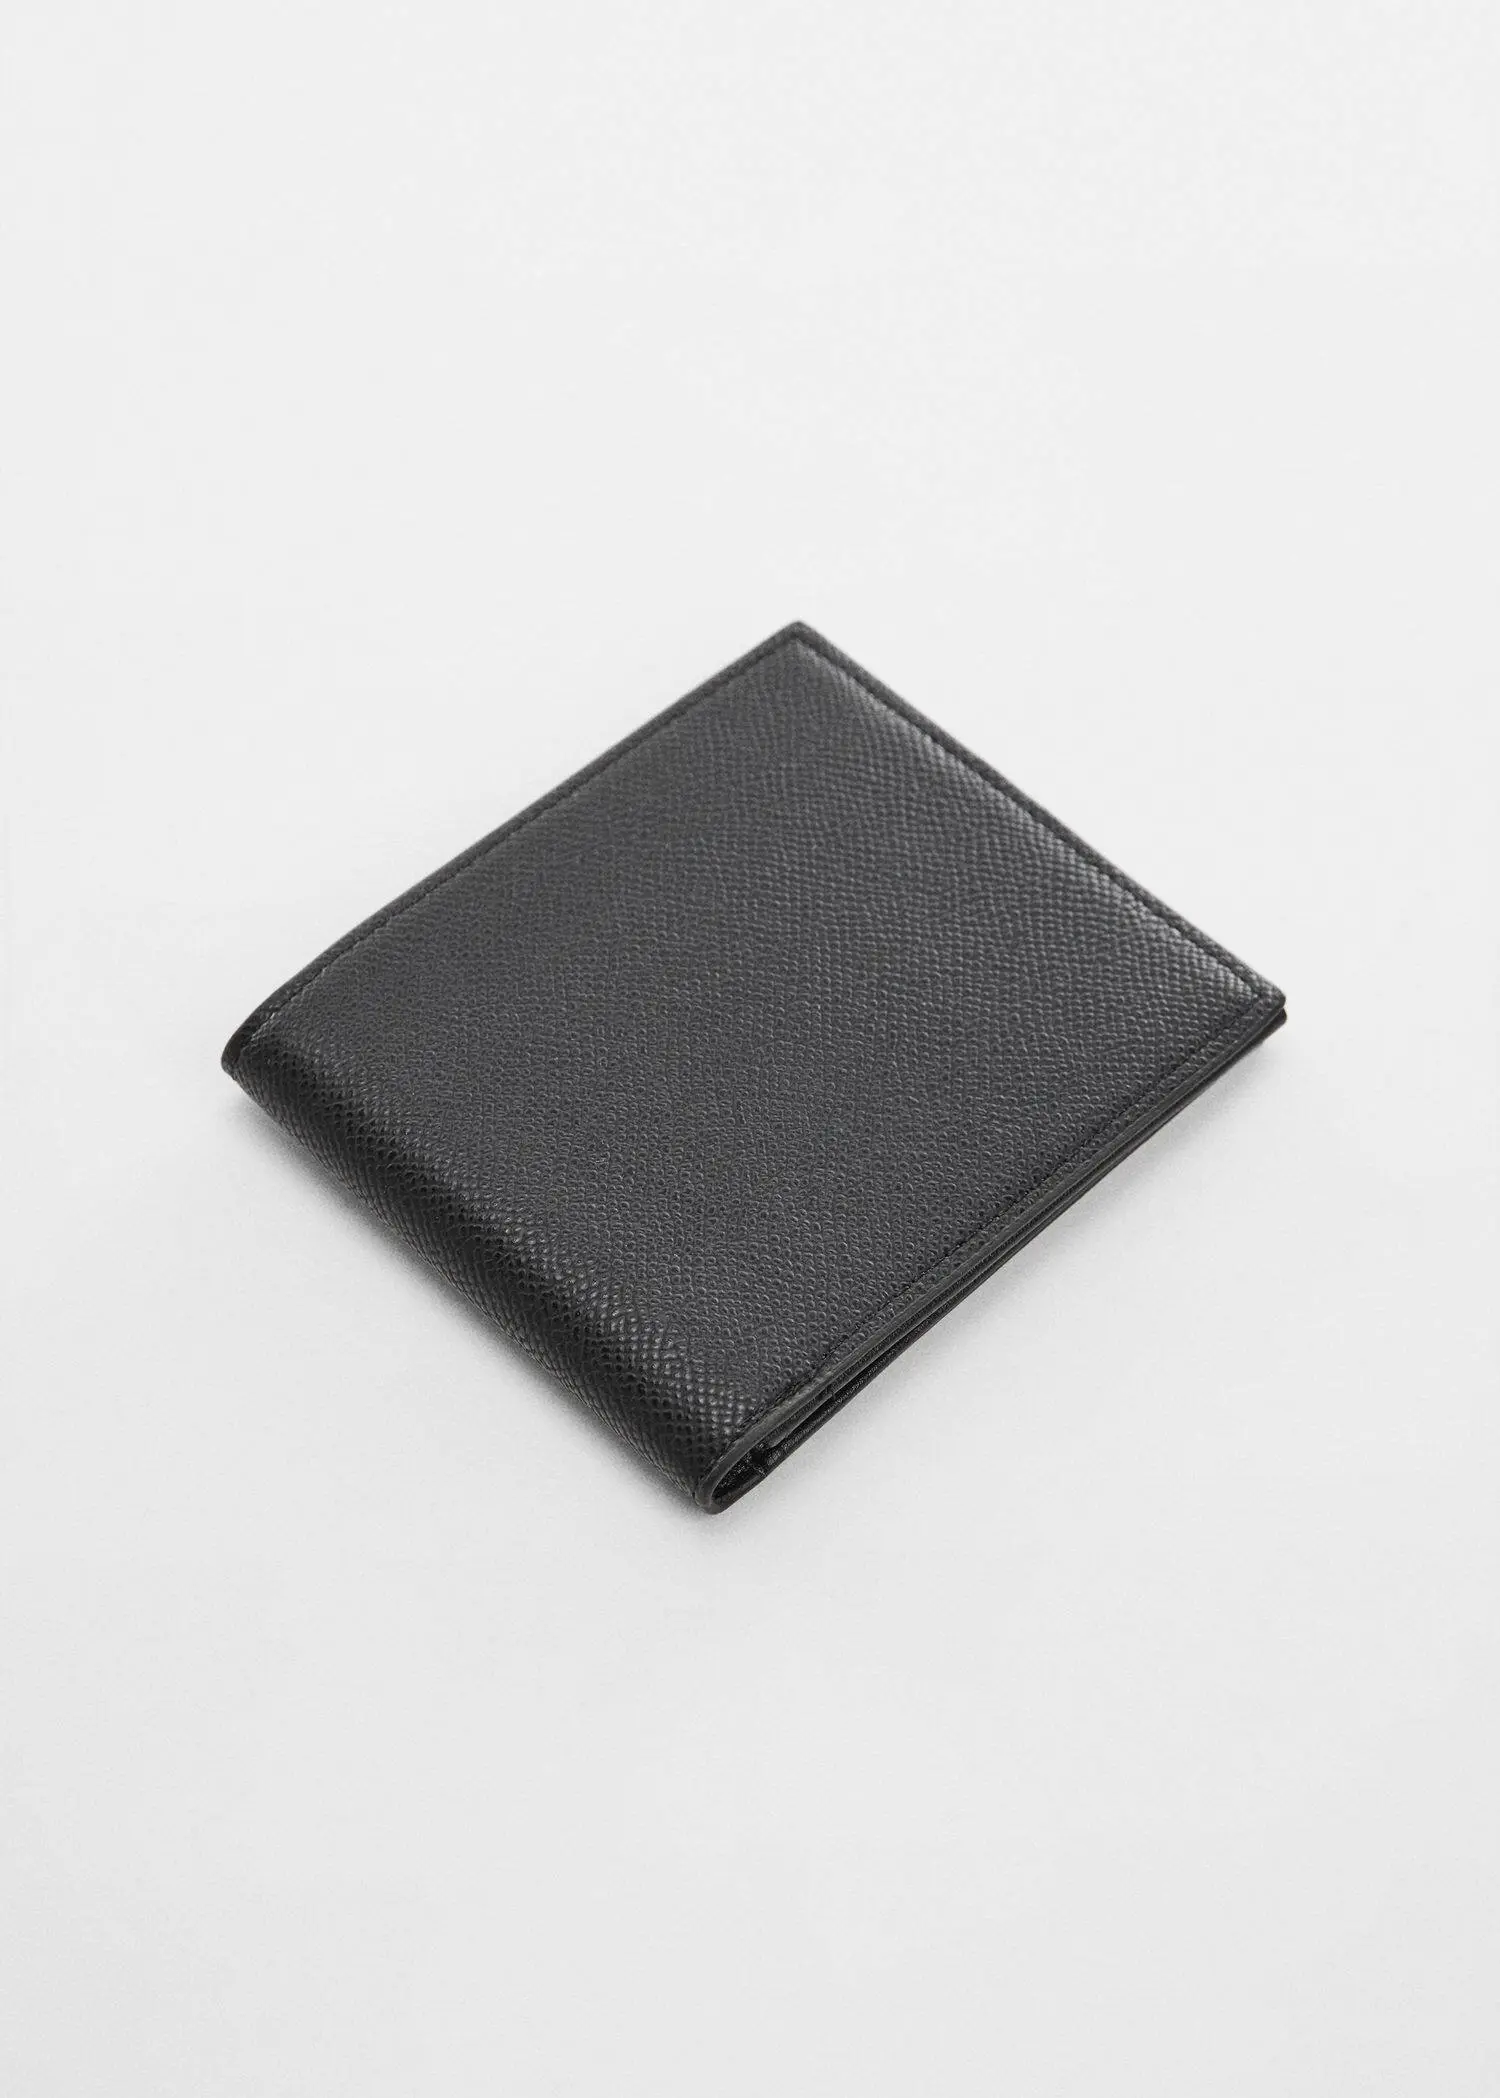 Mango Anti-contactless card holder wallet. 3